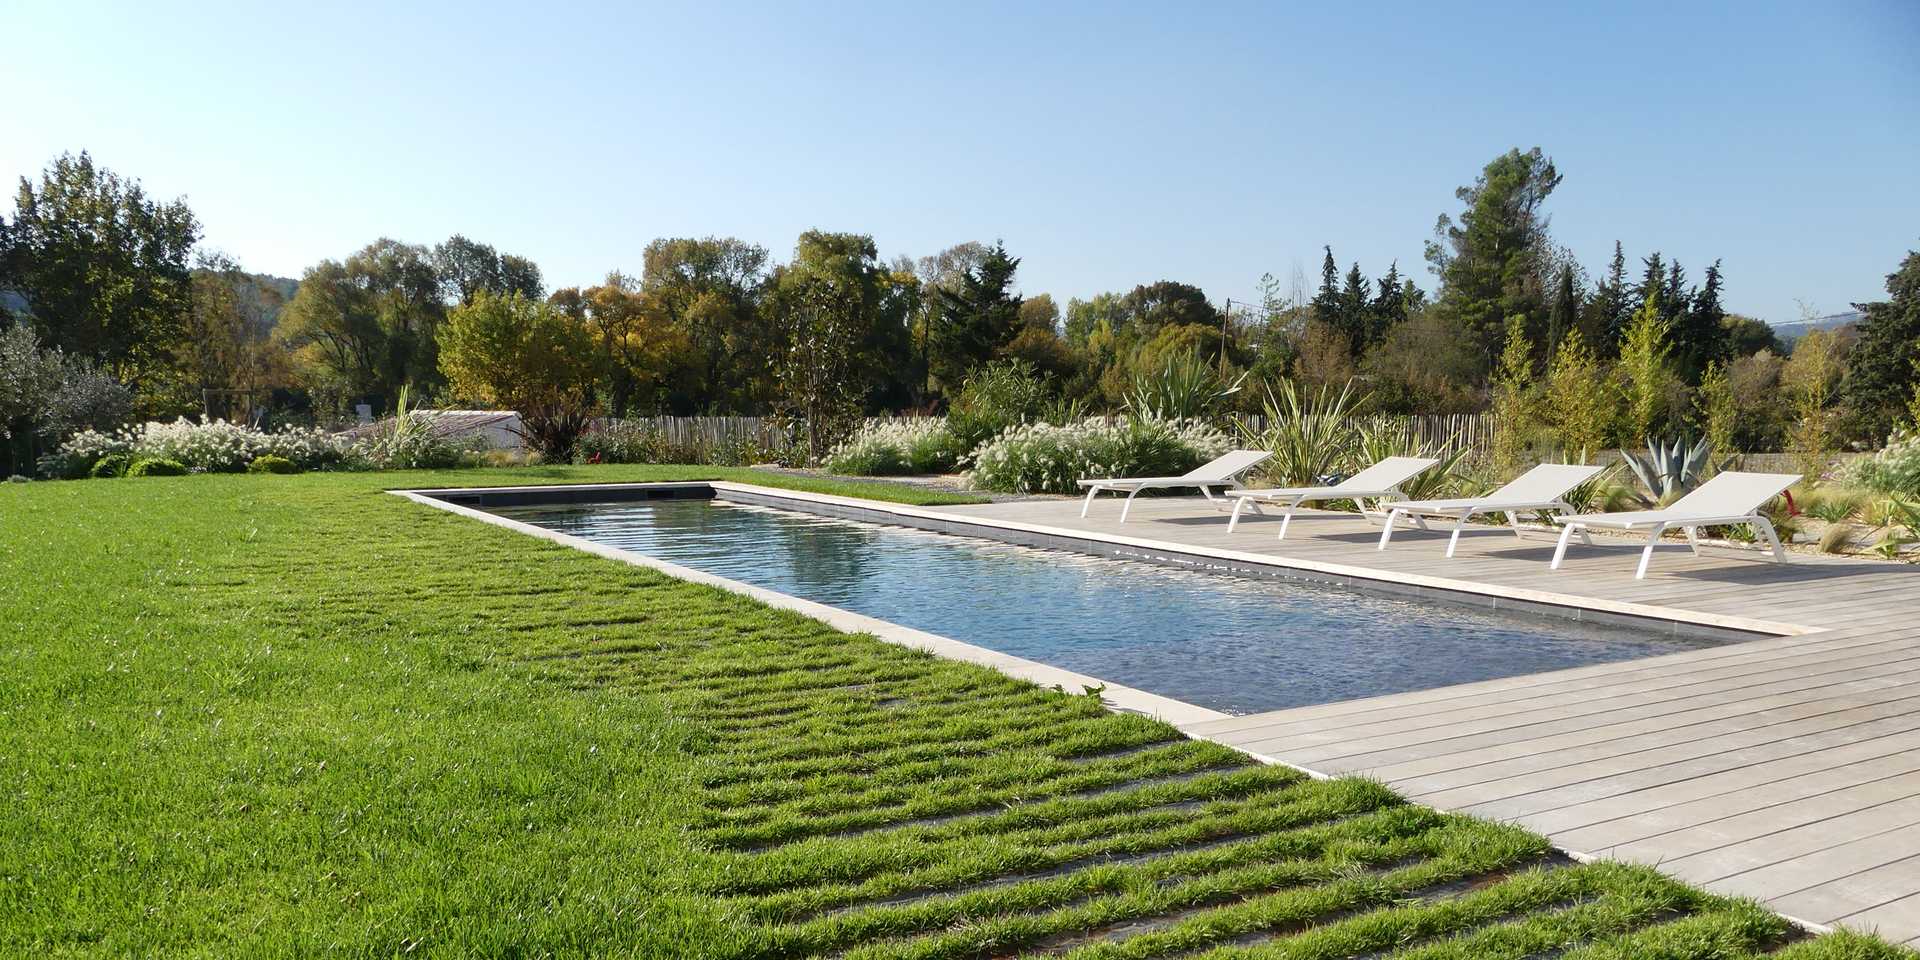 Mediterranean garden with swimming pool designed by a landscape gardener